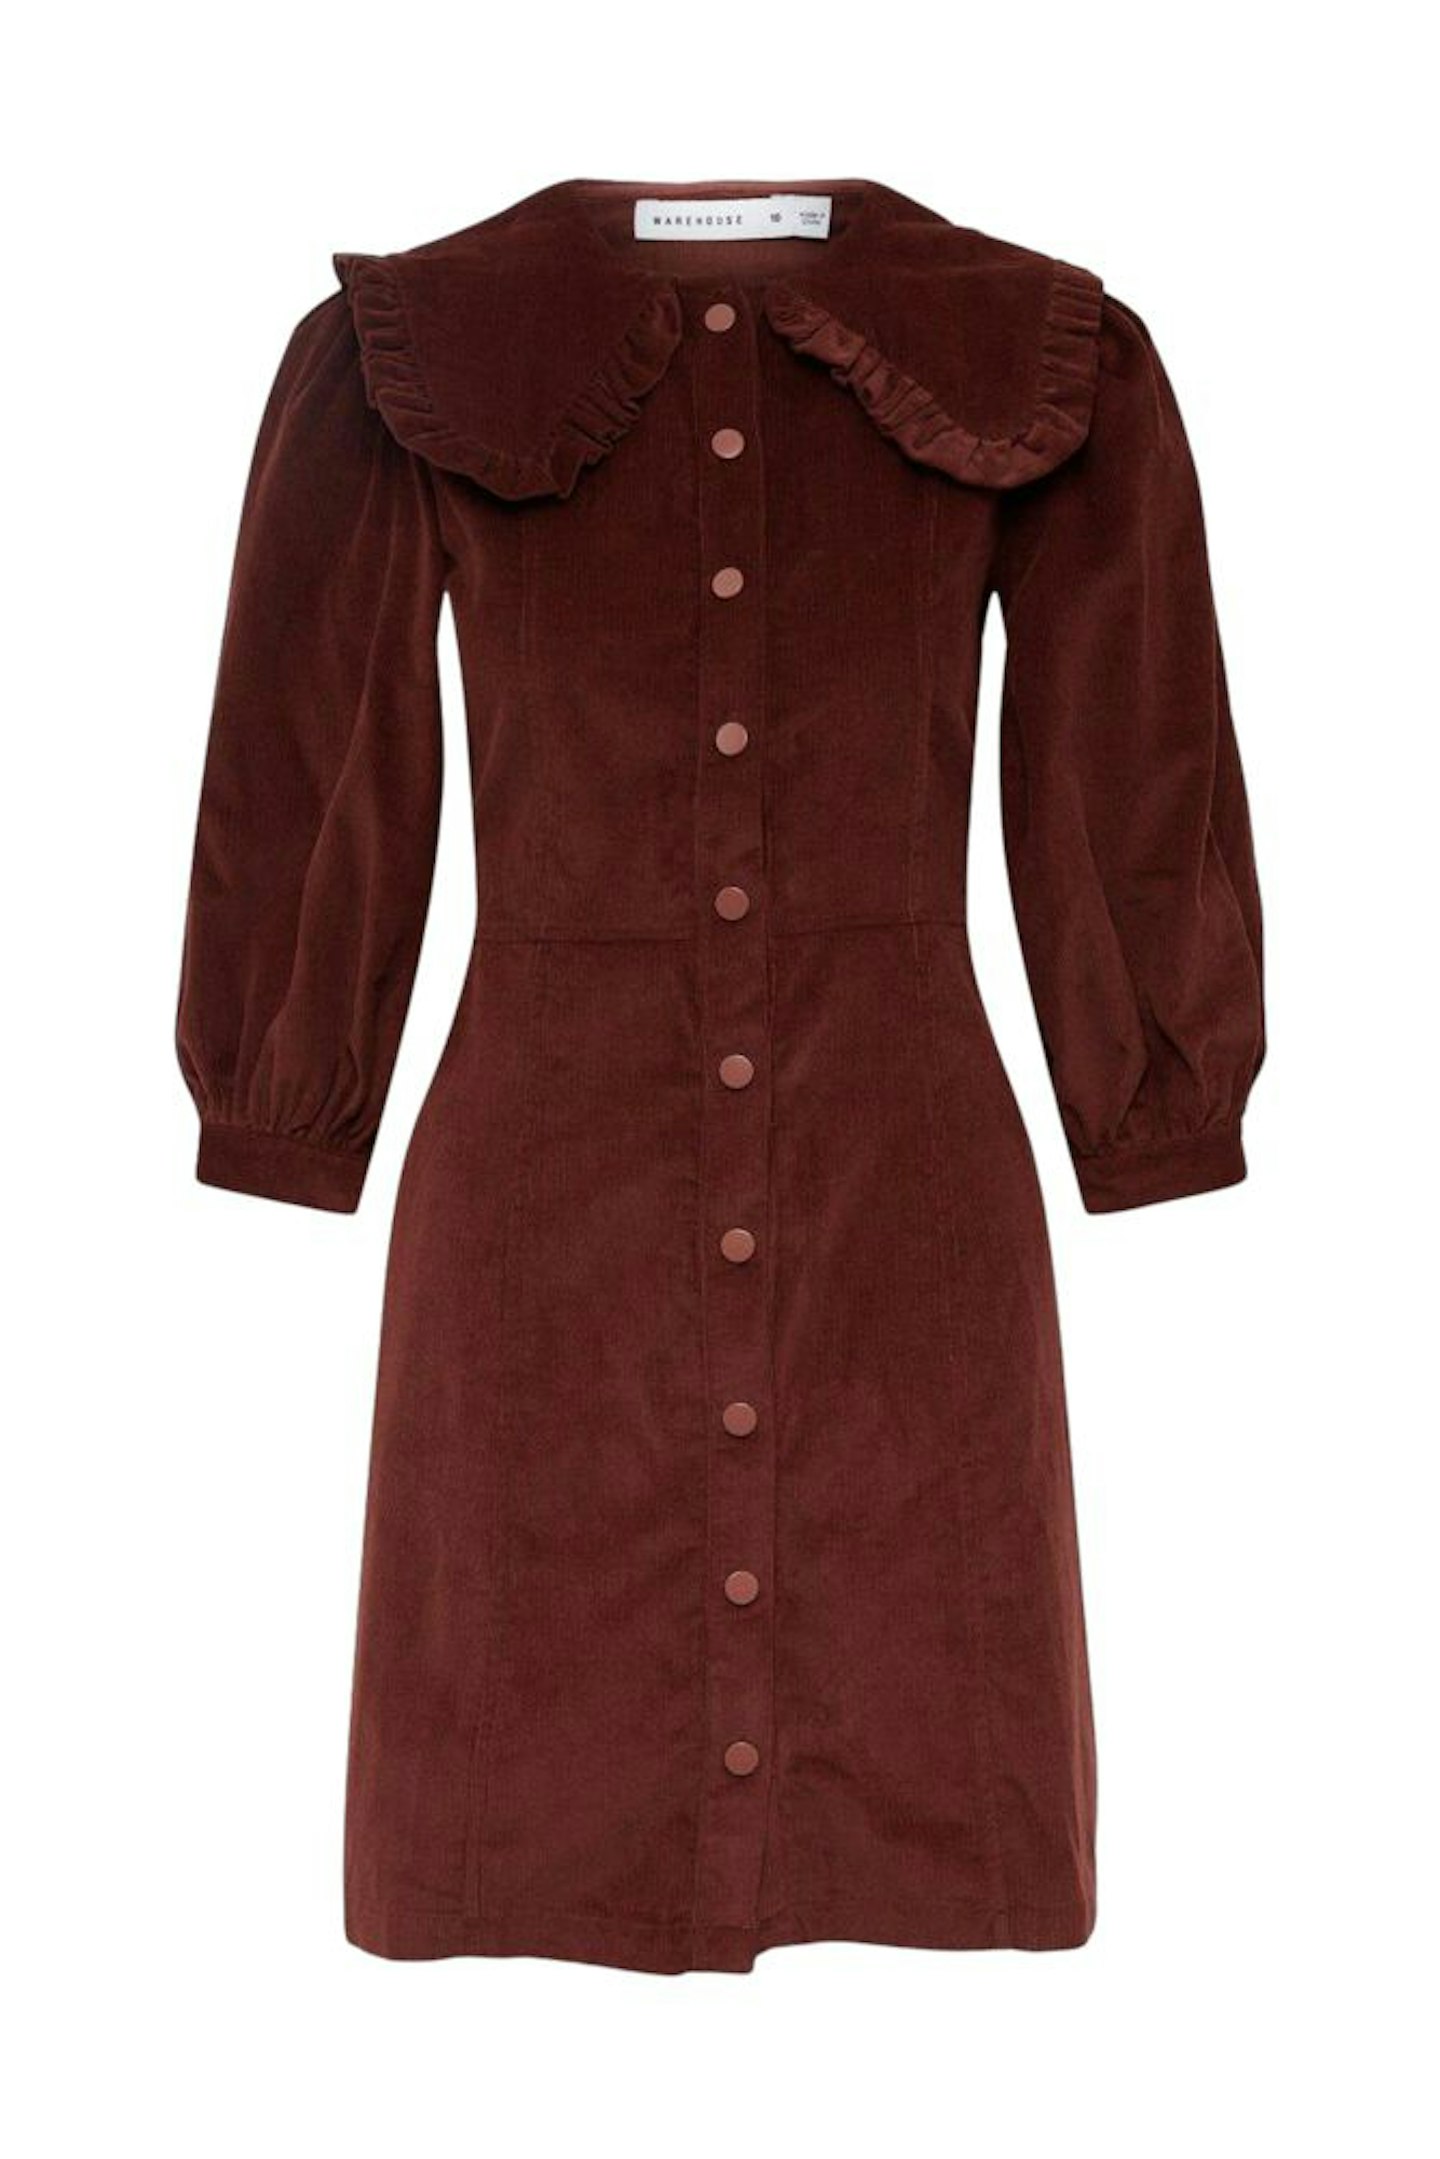 Warehouse, Cord Frill-Collar Puff-Sleeve Shirt Dress, WAS £59 NOW £35.40